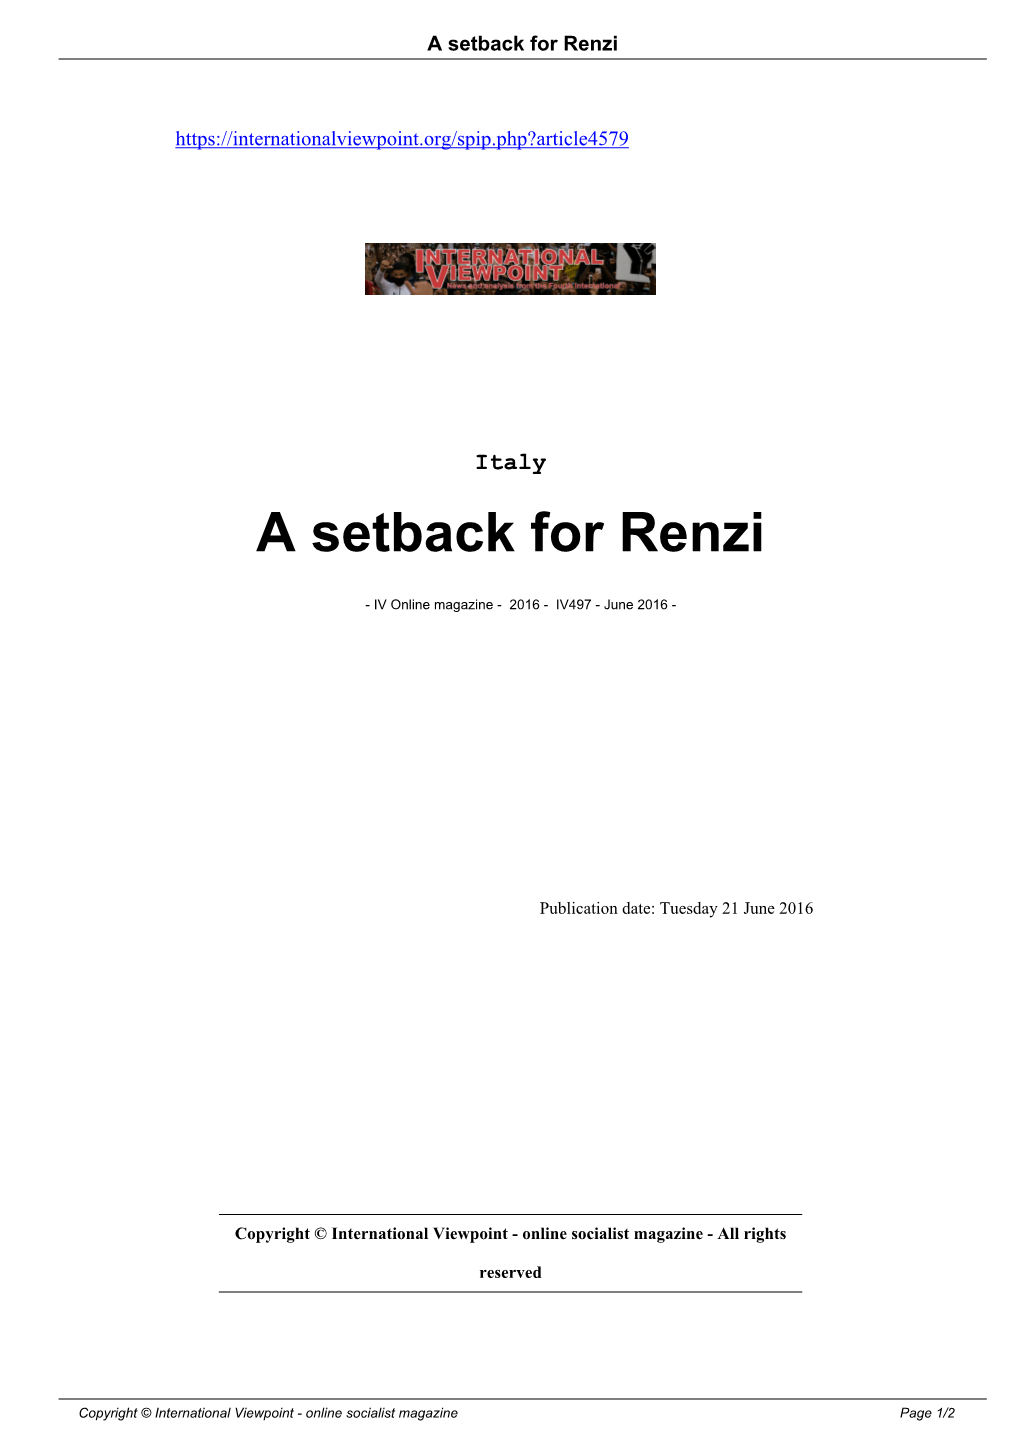 A Setback for Renzi